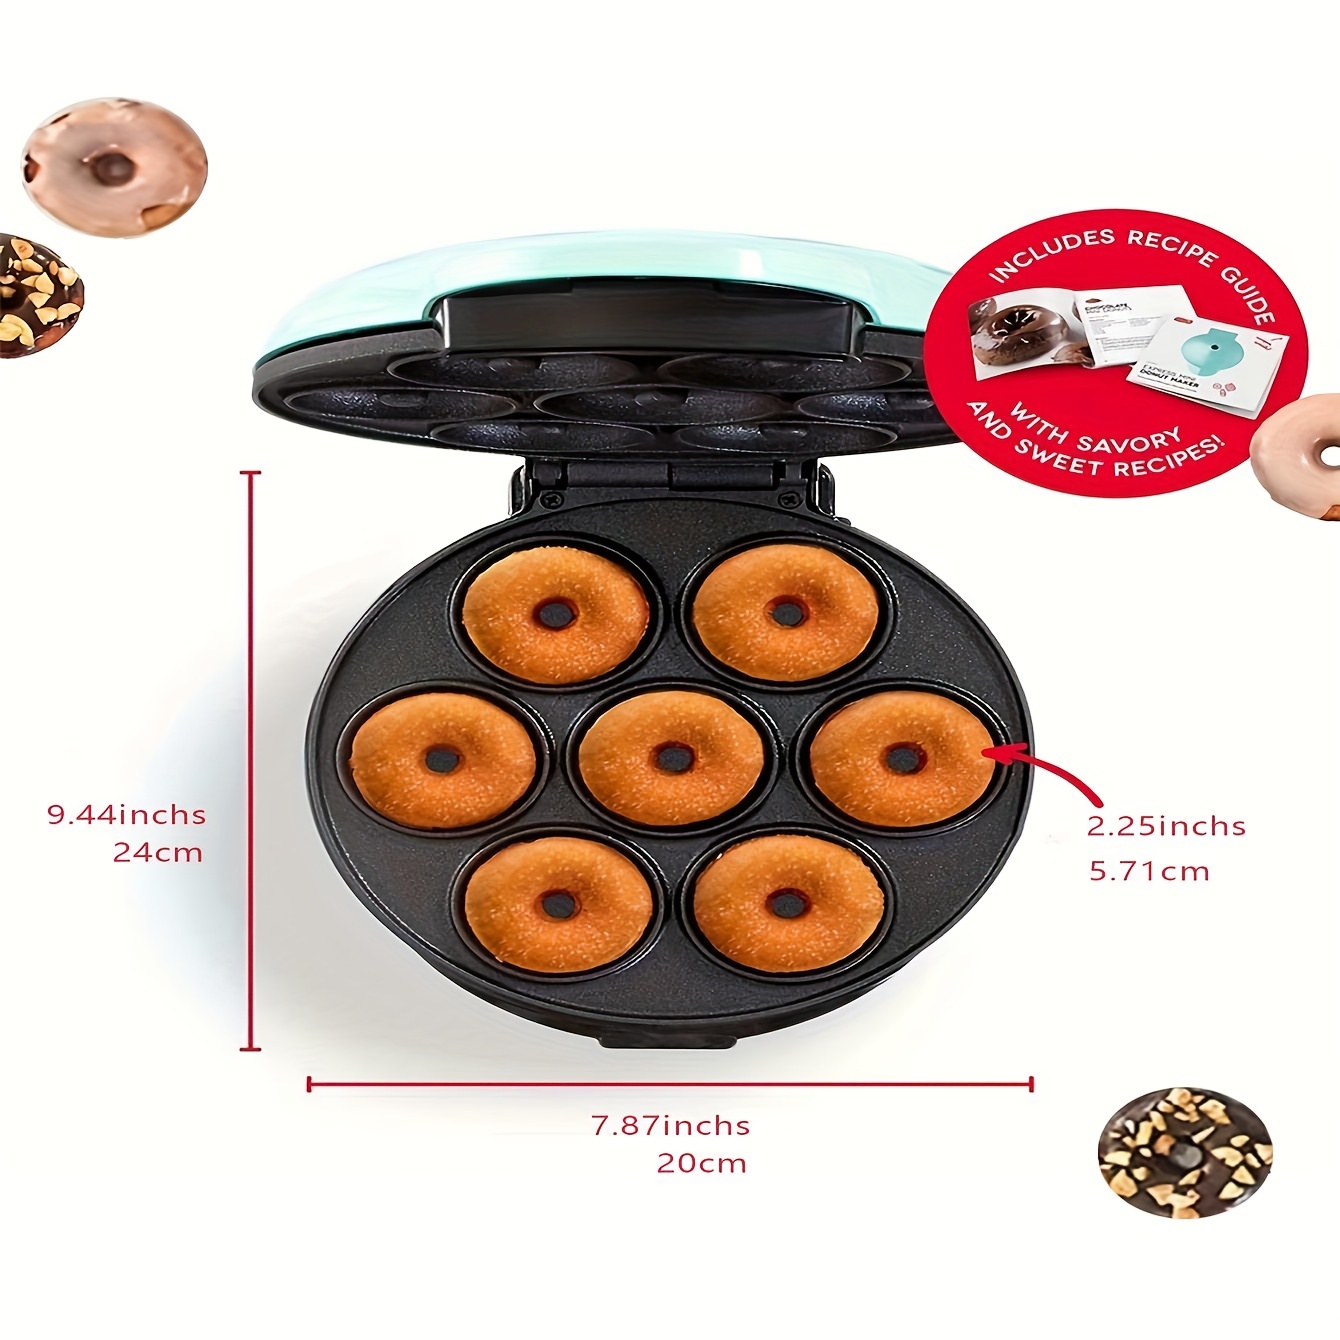 Dash Express Mini Donut Maker